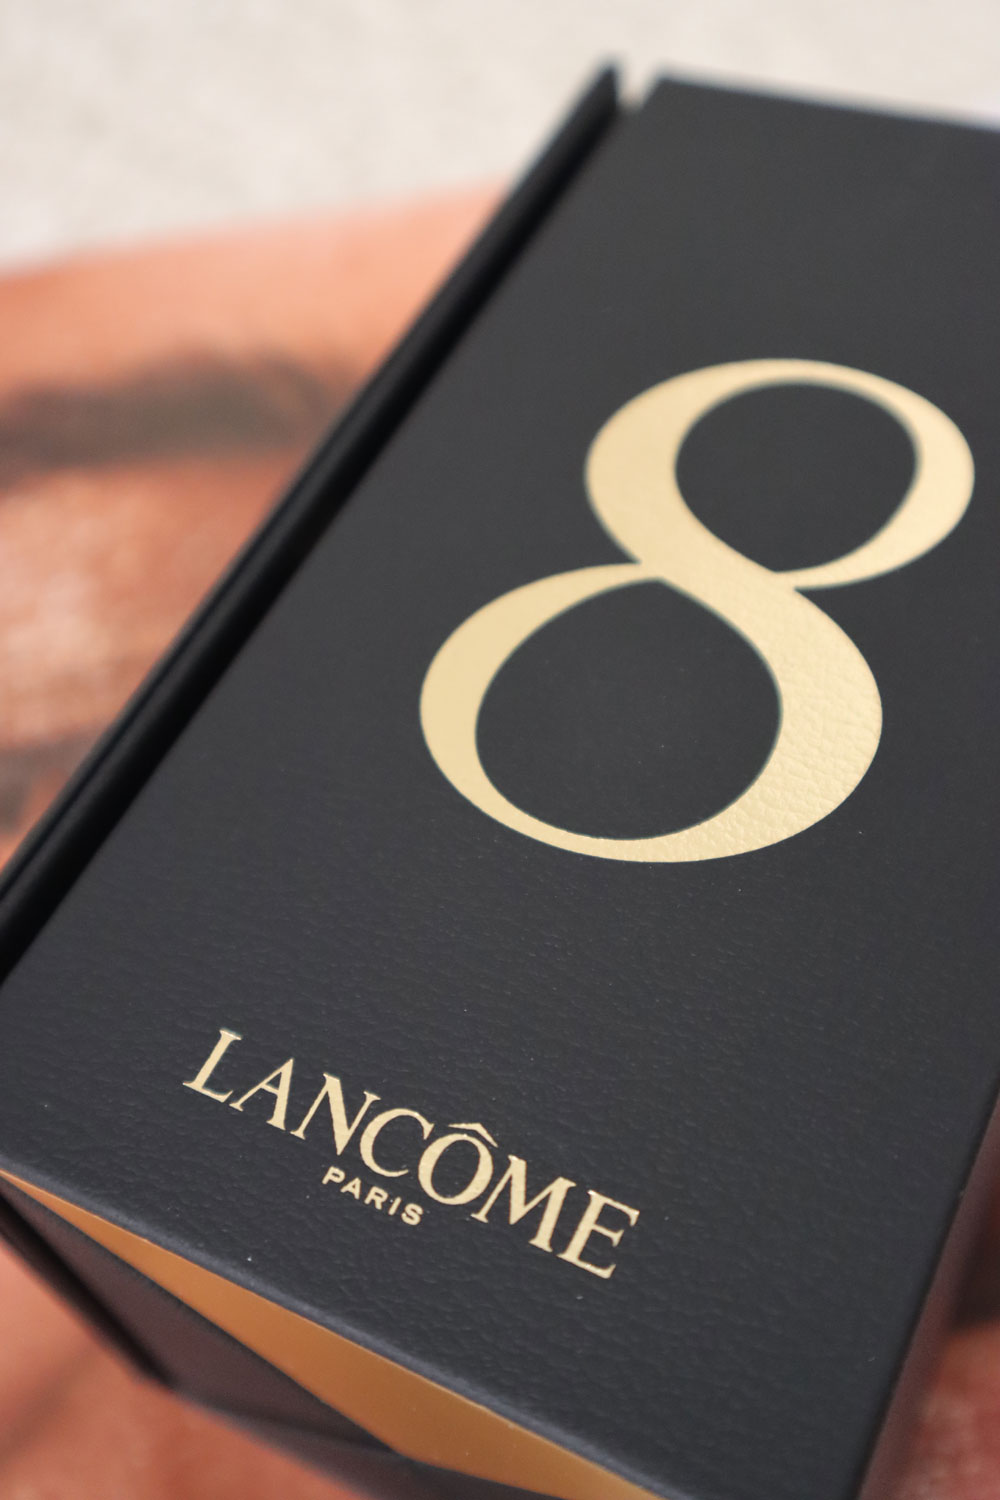 Worth the hype? sonrisa testet den neuen Le 8 Hypnôse Mascara von Lancôme.